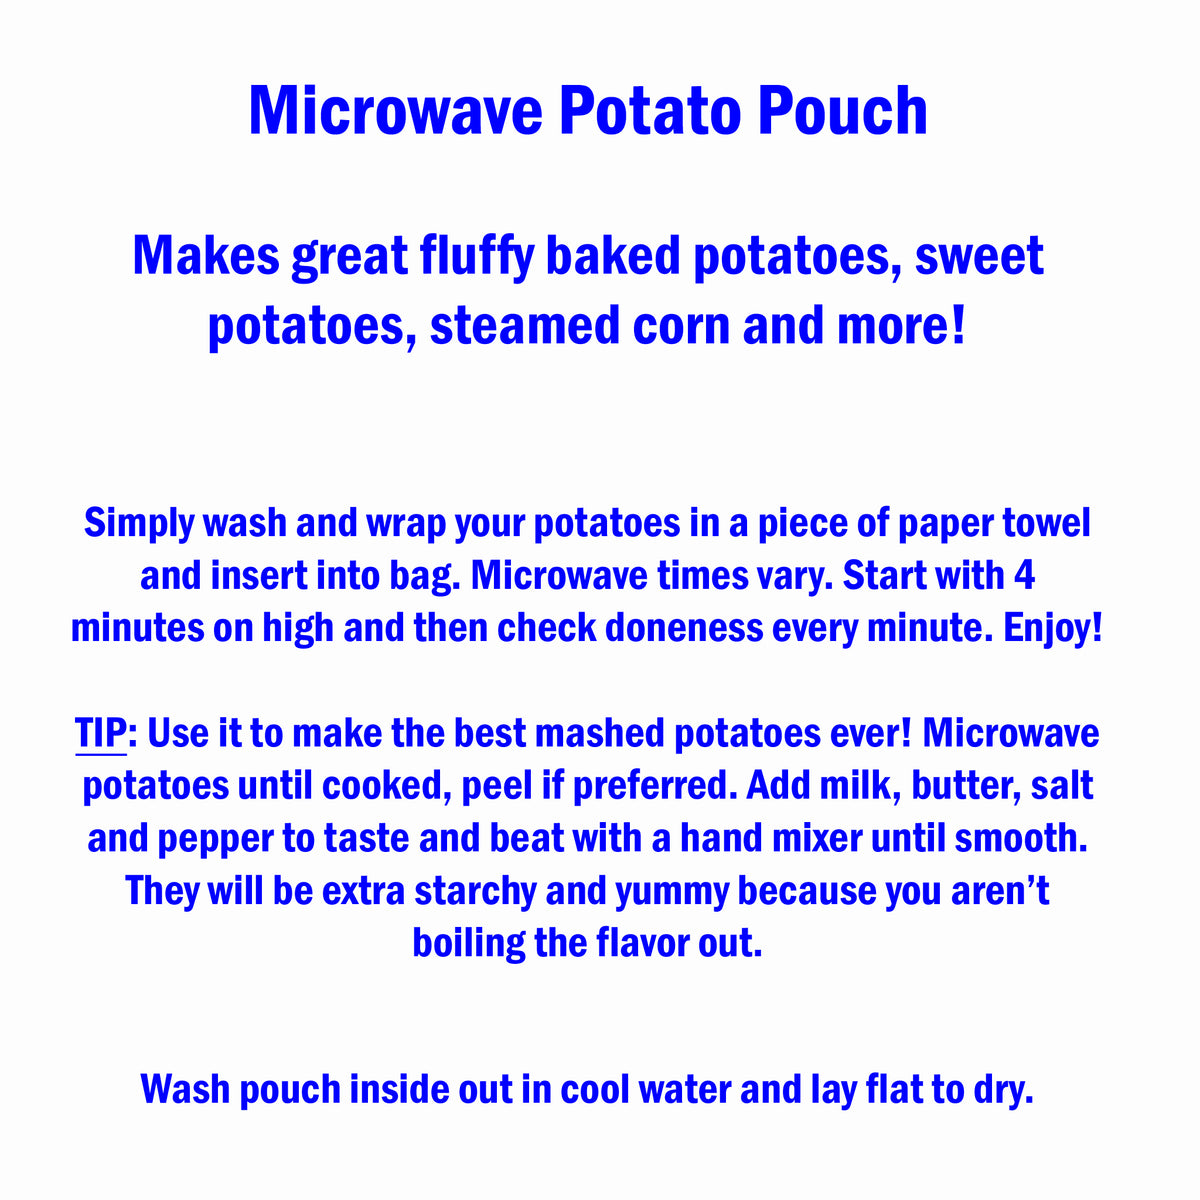 crab-design-microwave-potato-pouch-bag-blue-white-vitamindguide